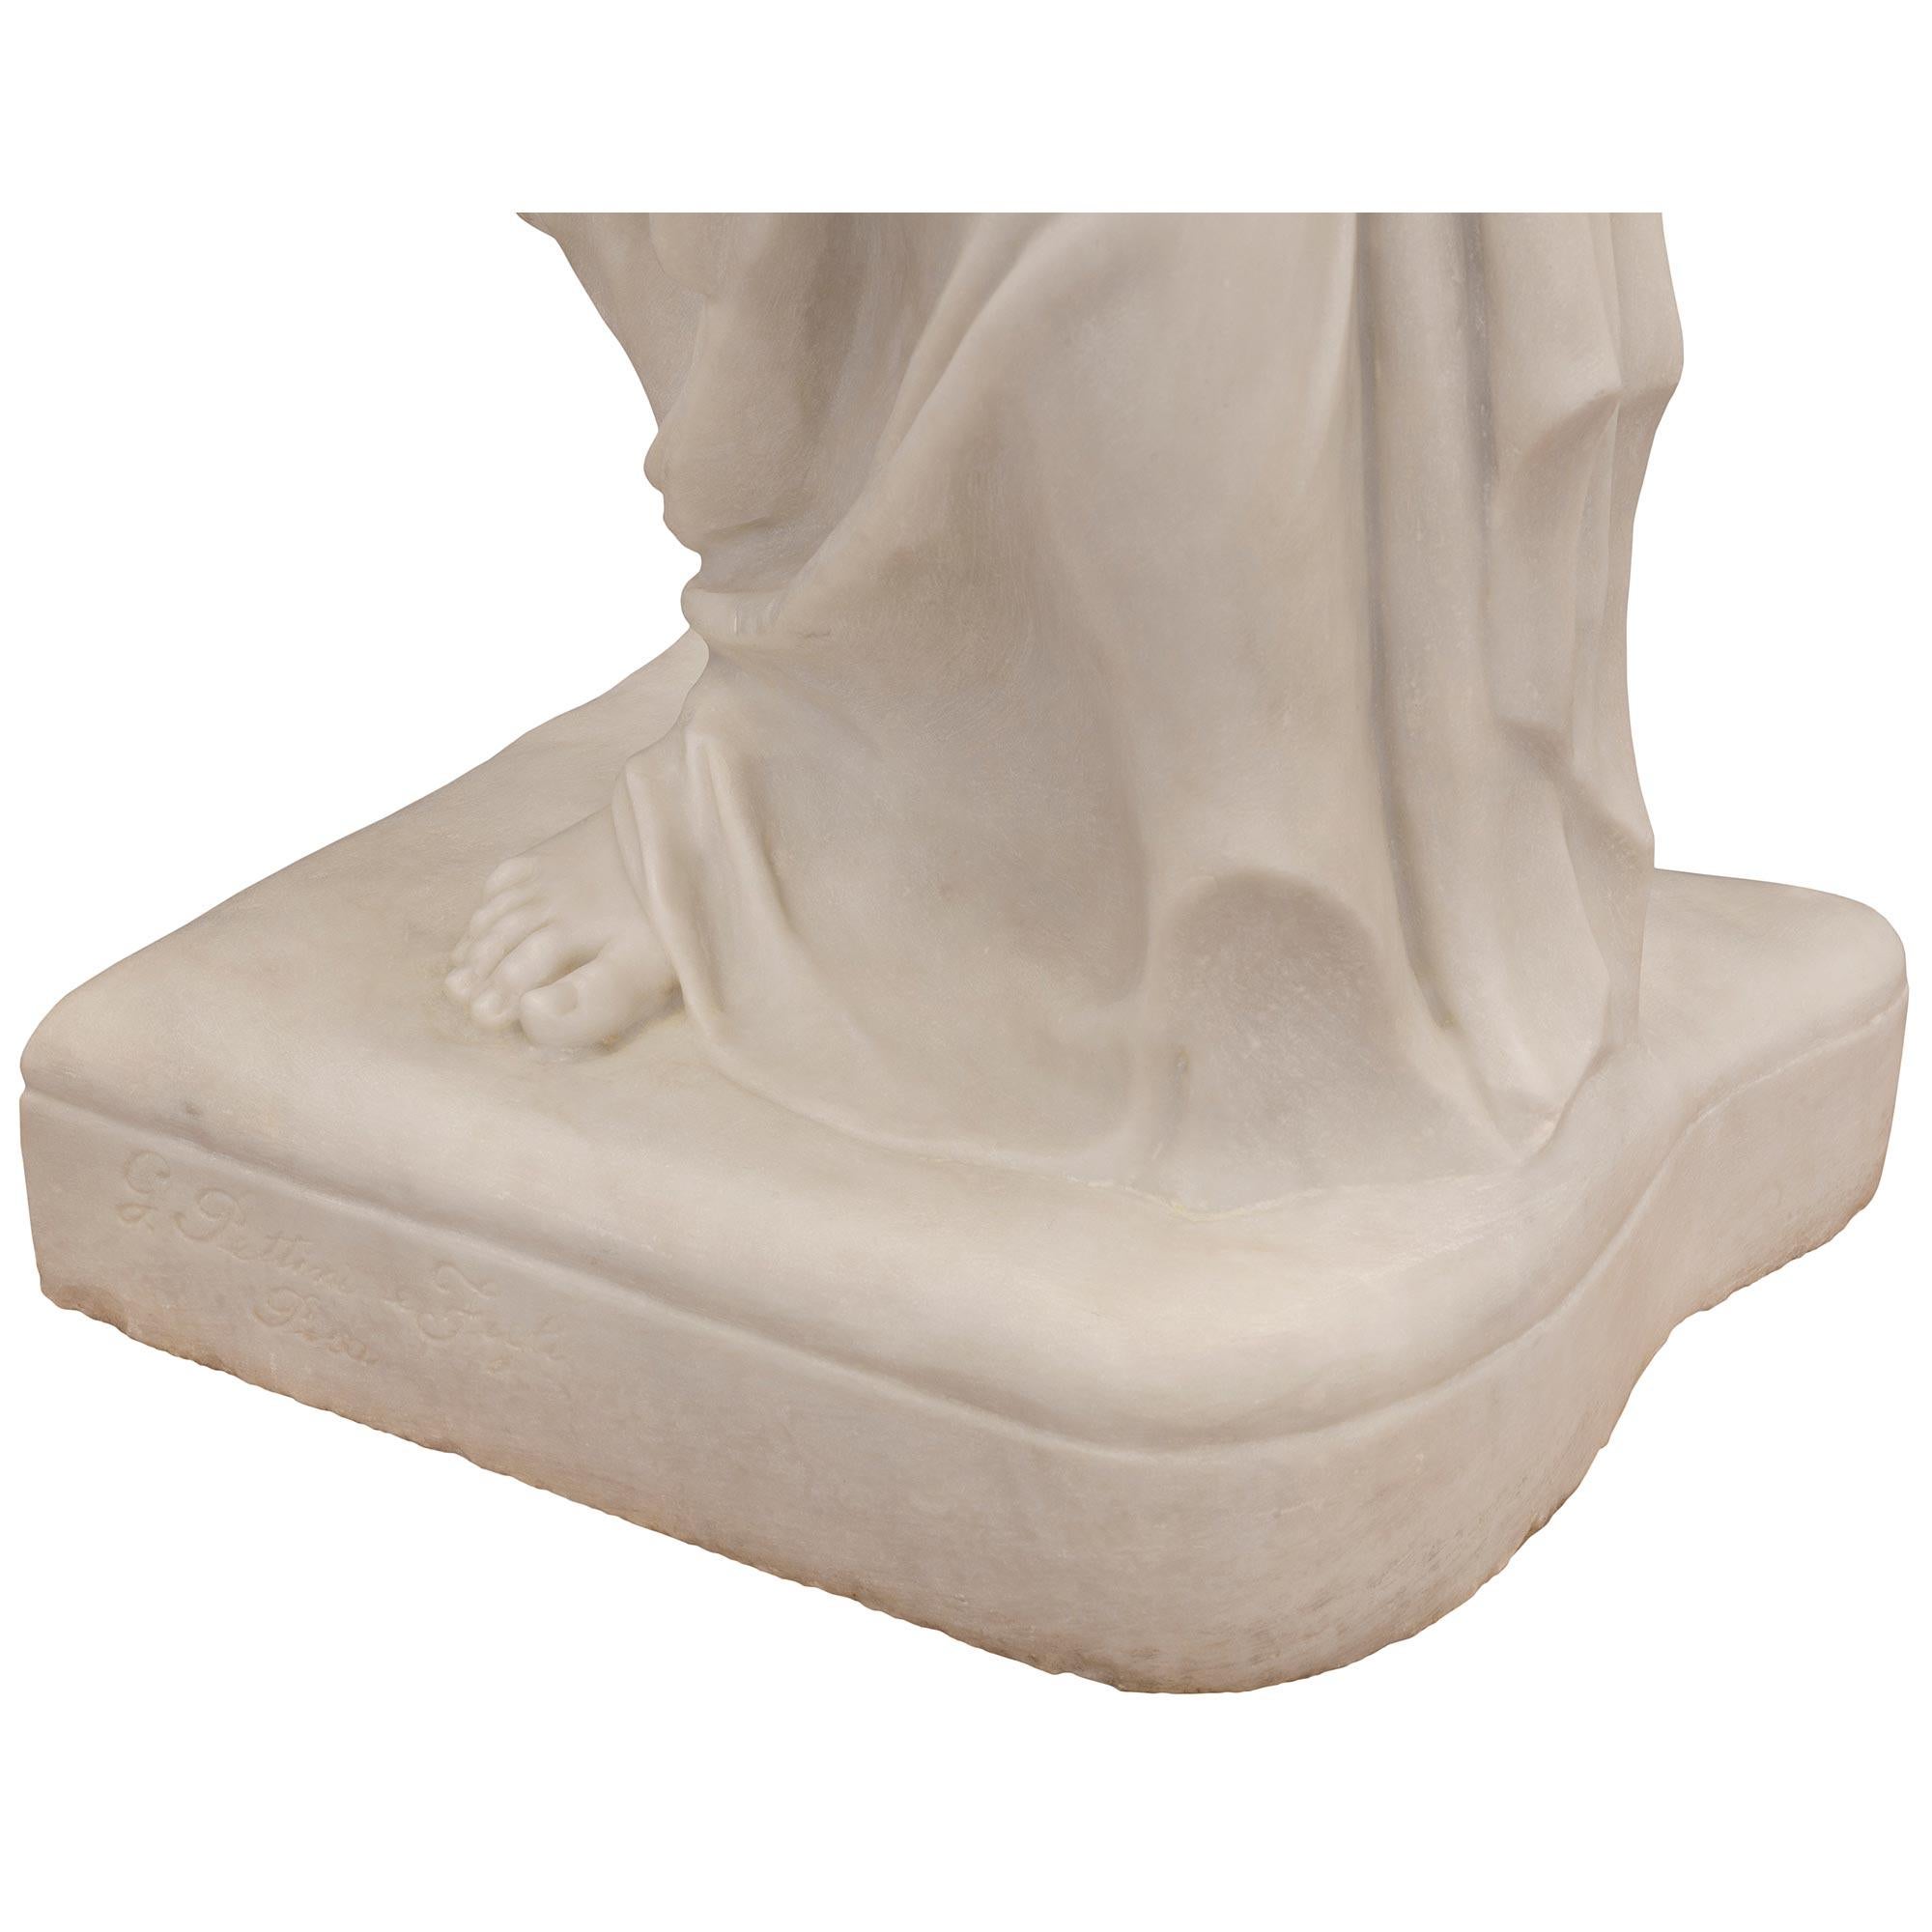 Italian 19th Century Neo-Classical St. Marble Statue of Venus De Milo For Sale 1